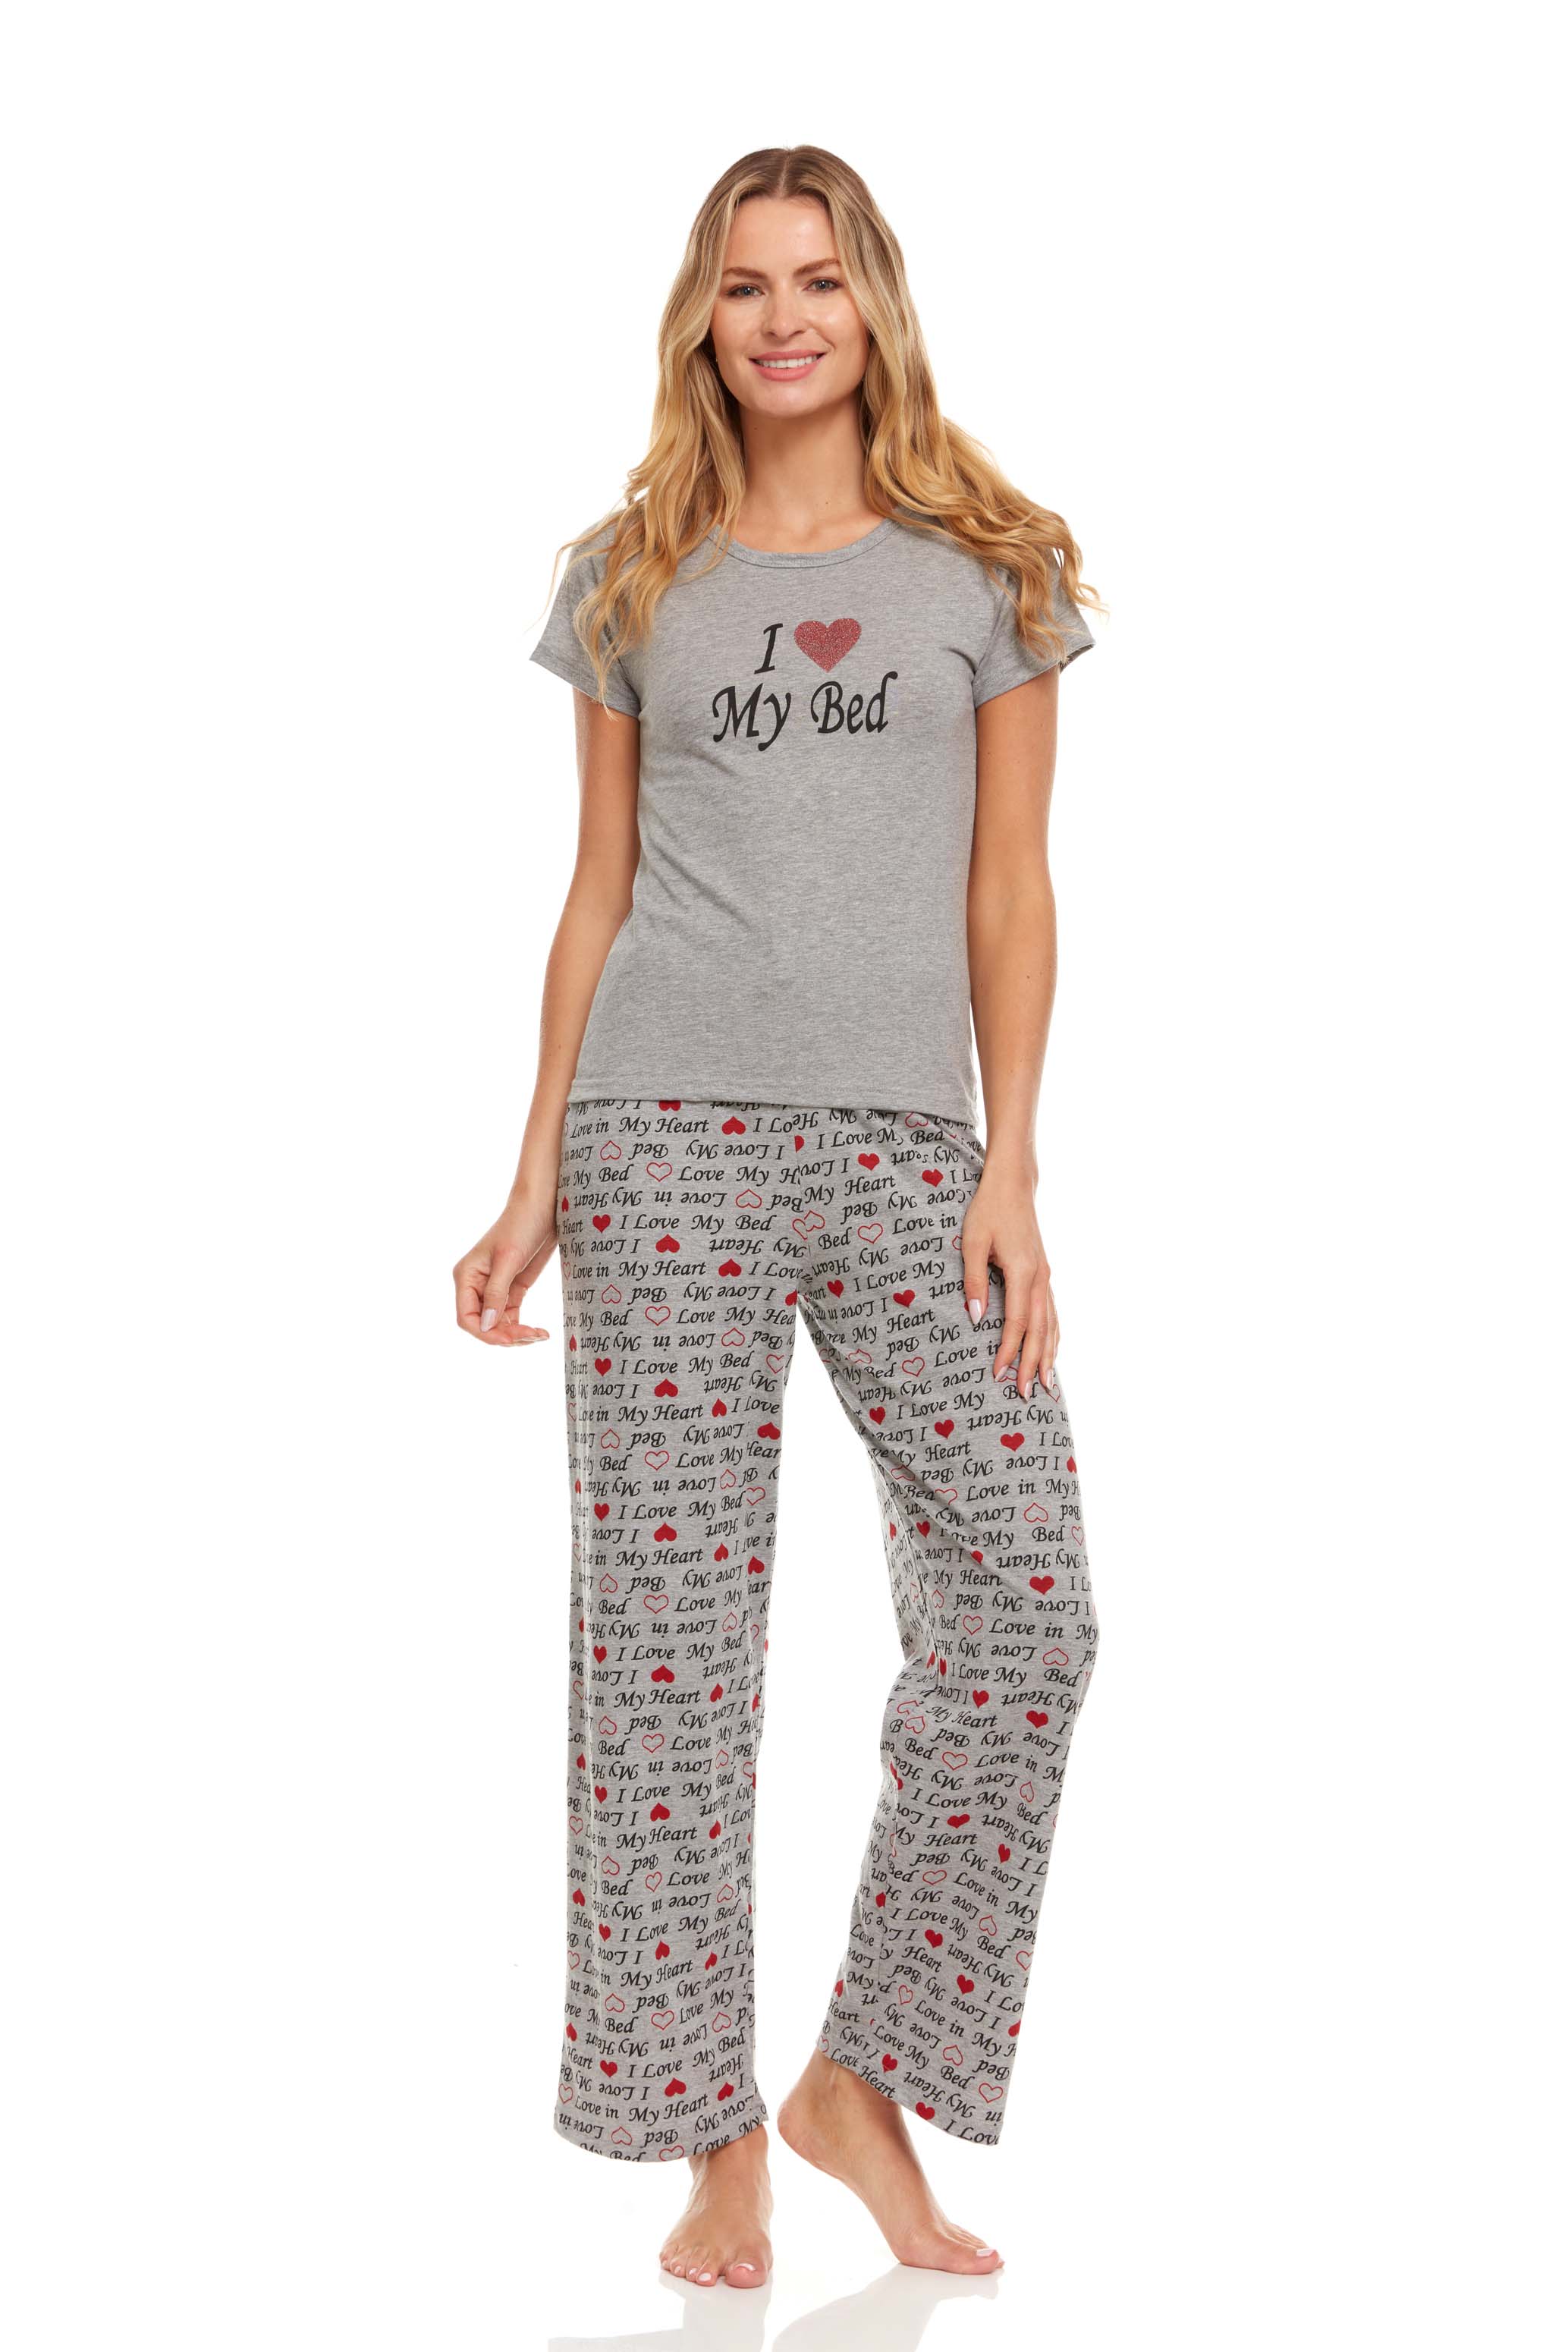 Lati Fashion 09P Womens Pants Set Sleepwear Pajamas Woman Short Sleeve Sleep Nightshirt